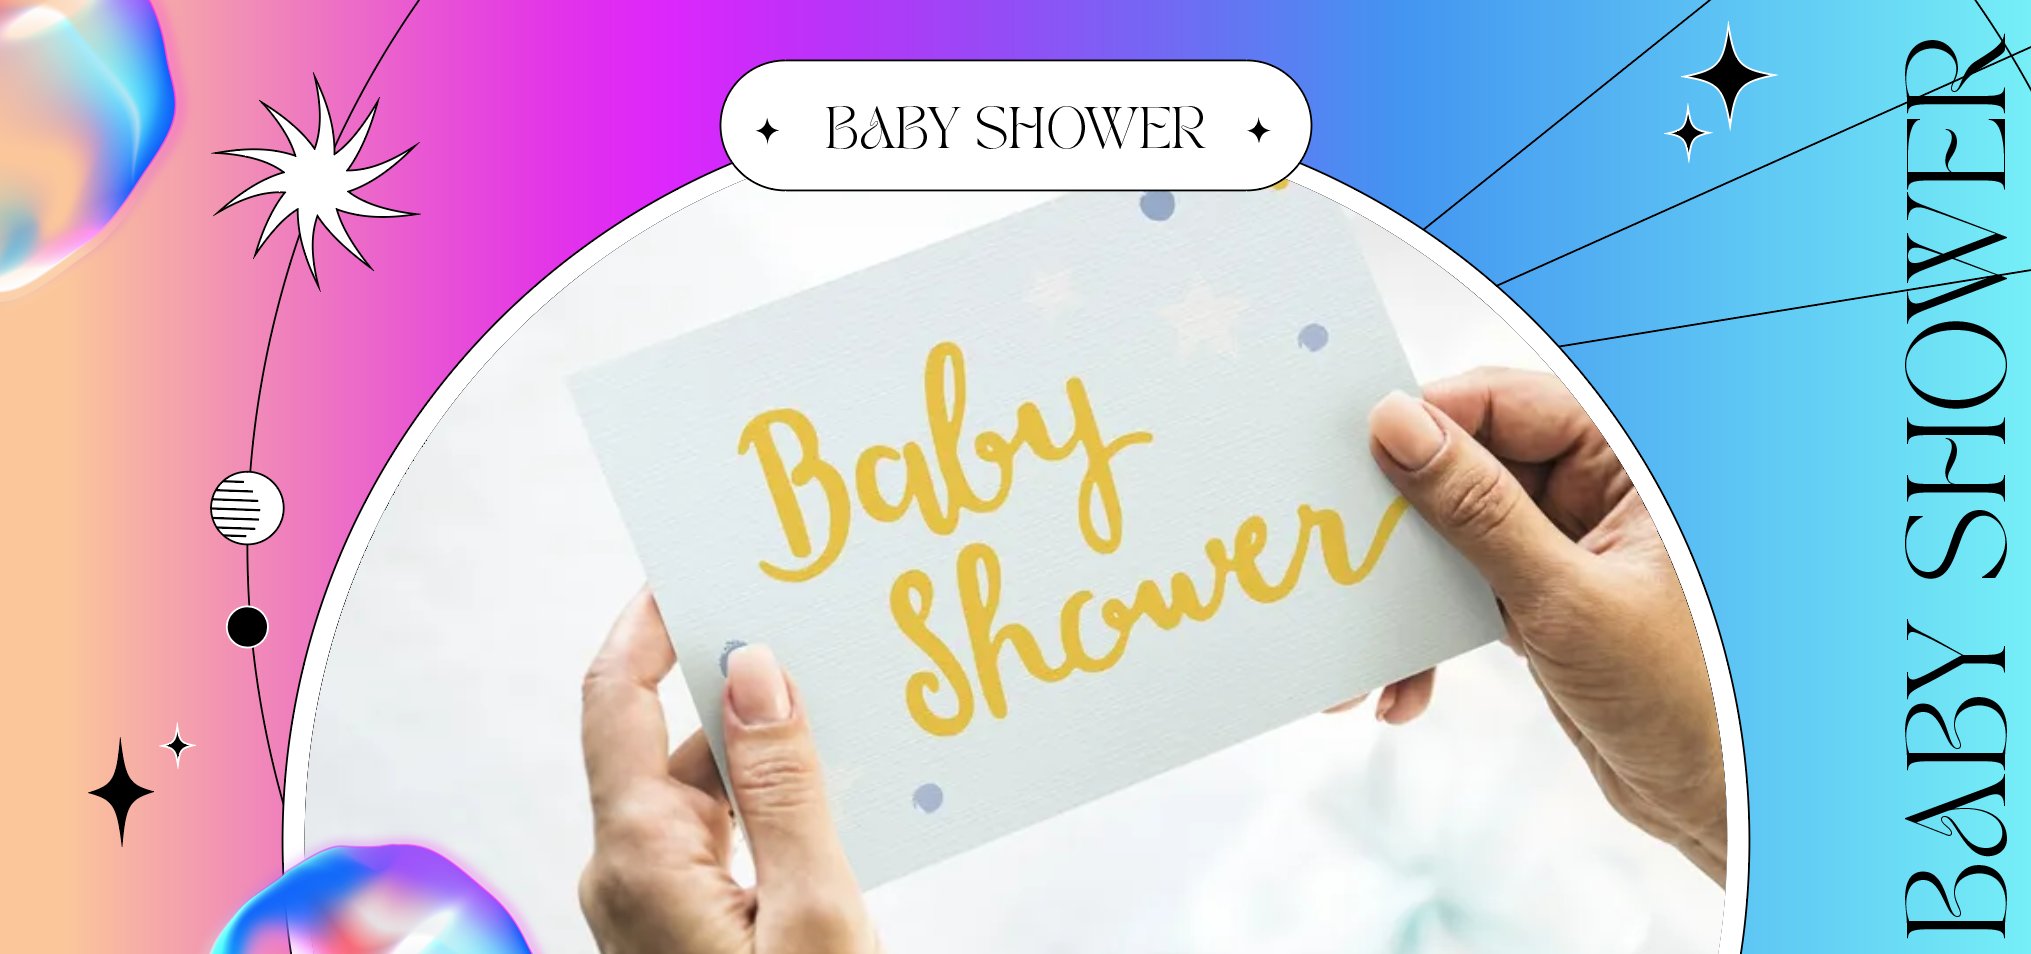 BABY SHOWER | GENDER REVEAL